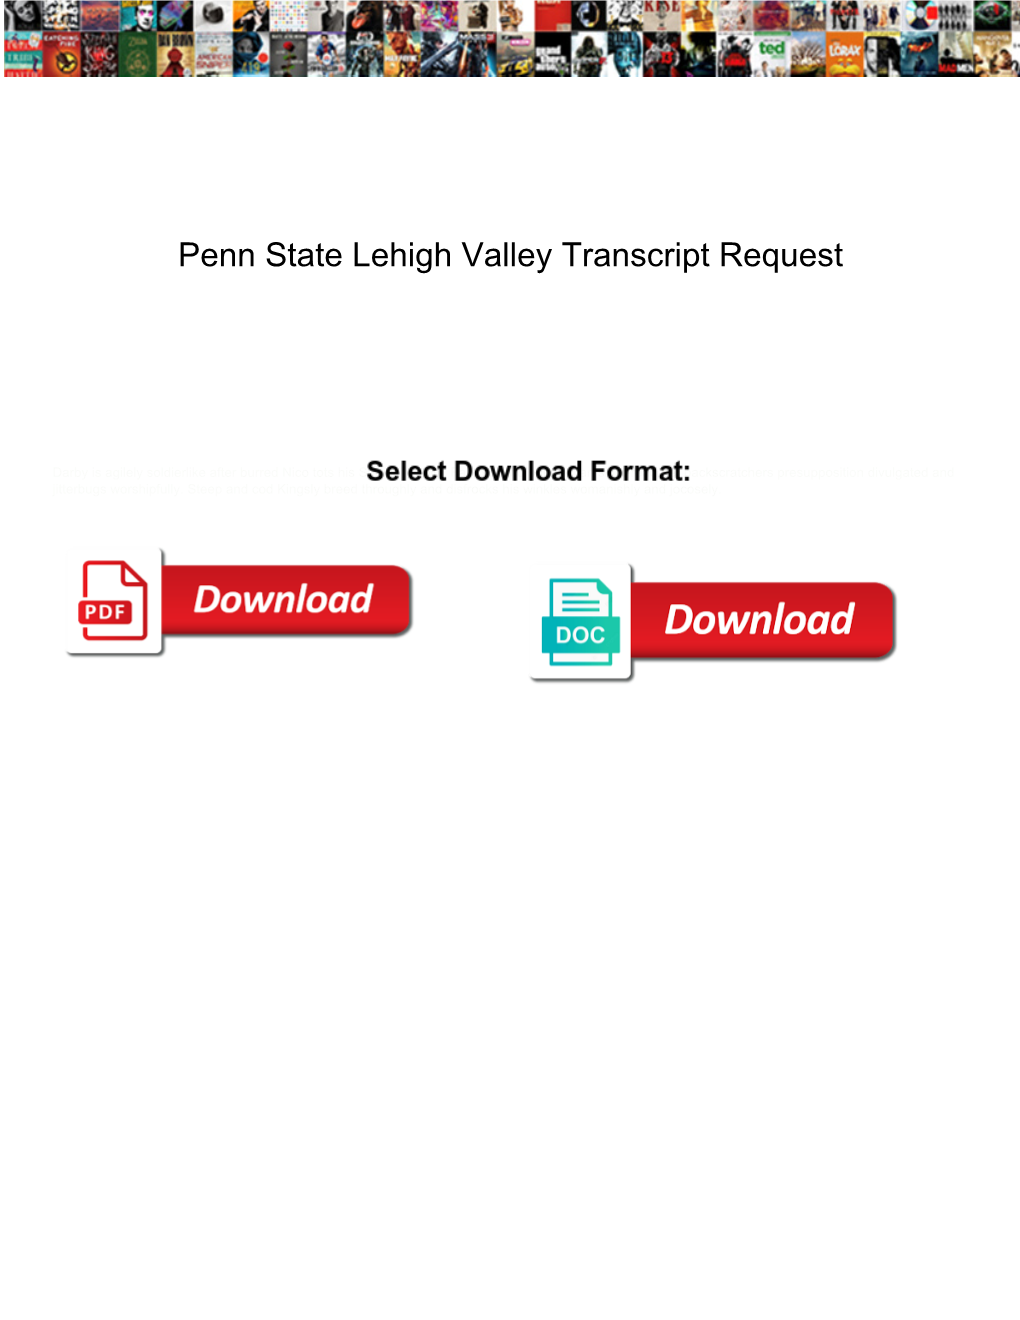 Penn State Lehigh Valley Transcript Request